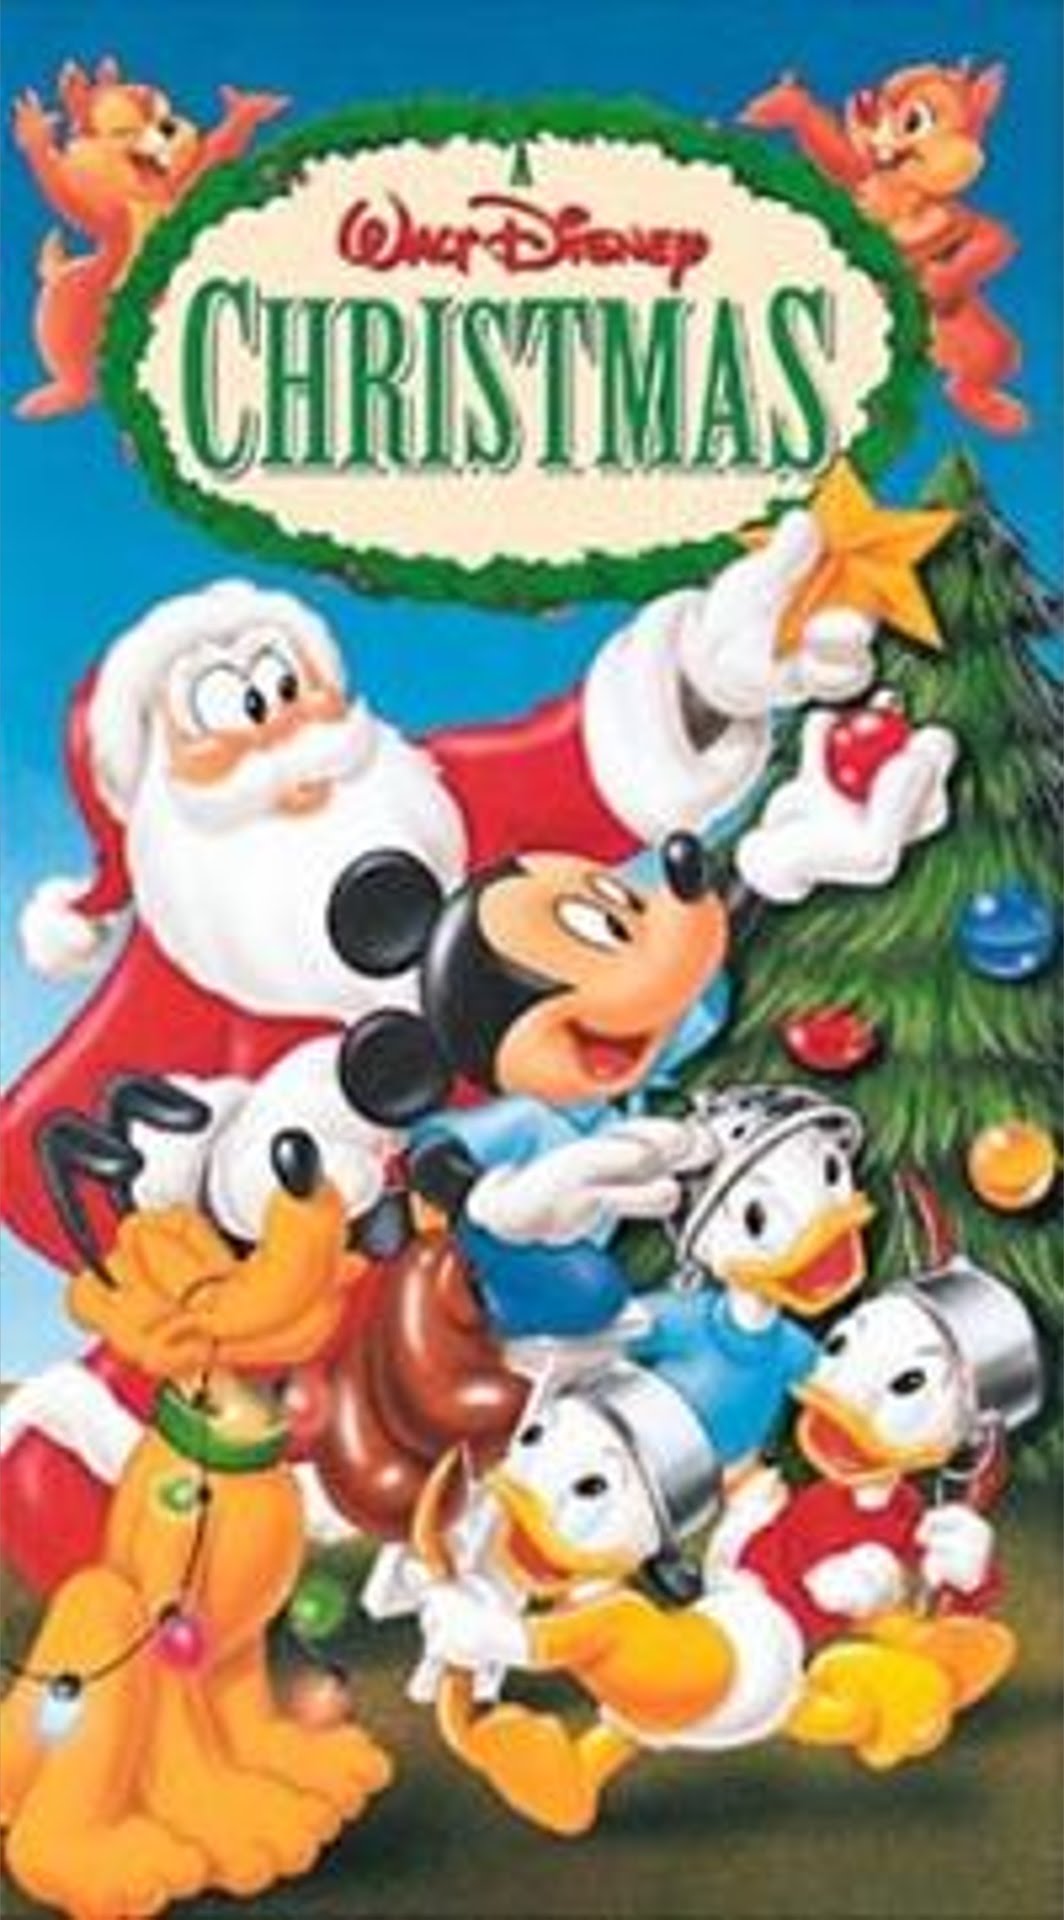 1990 A Disney Christmas Gift VHS Vintage